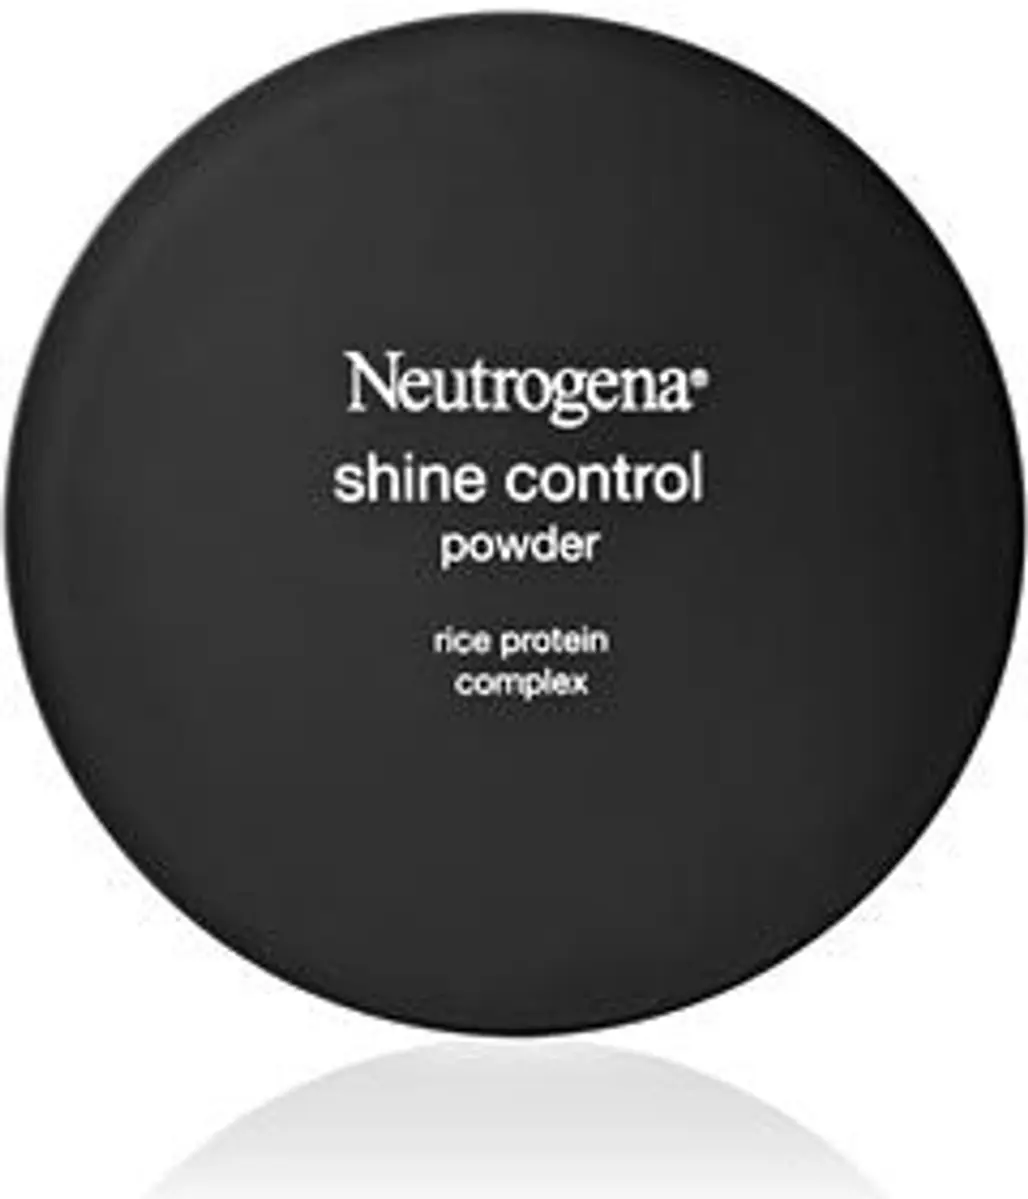 Neutrogena Shine Control Powder with Rice Protein Complex